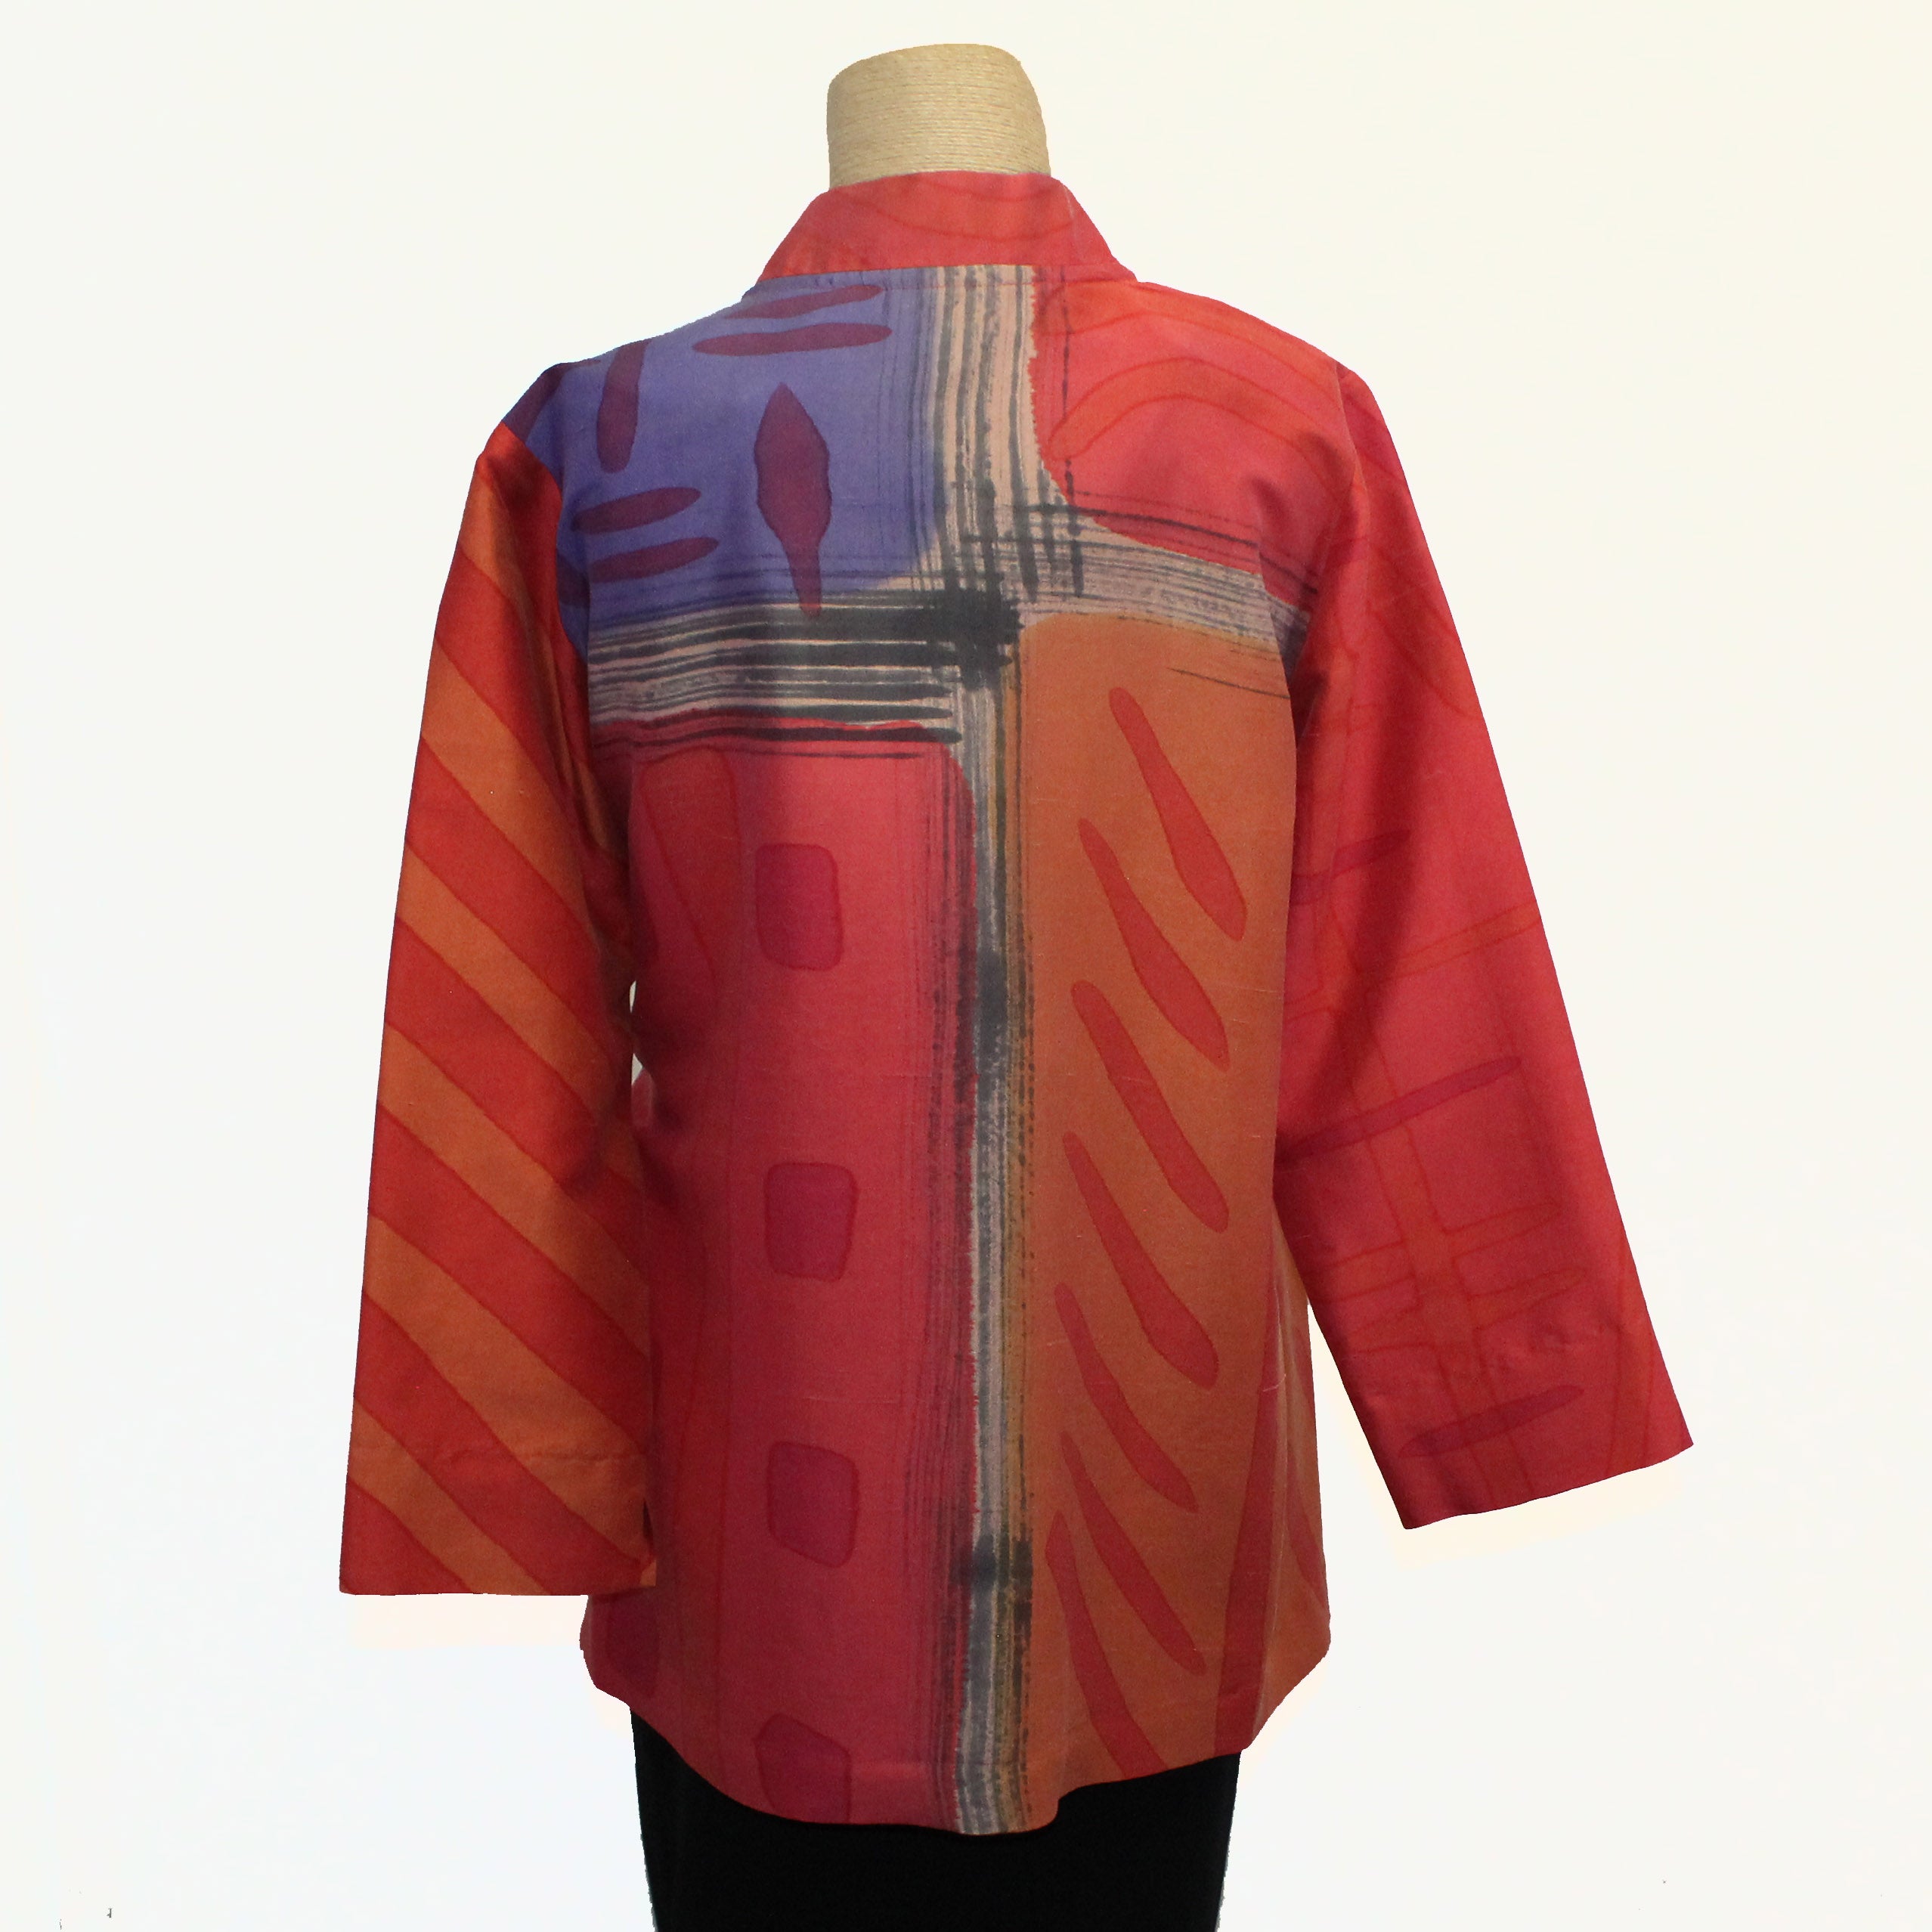 Kay Chapman Shirt, Santa Fe, Why Not, Orange/Purple/Vermillion, XS/S